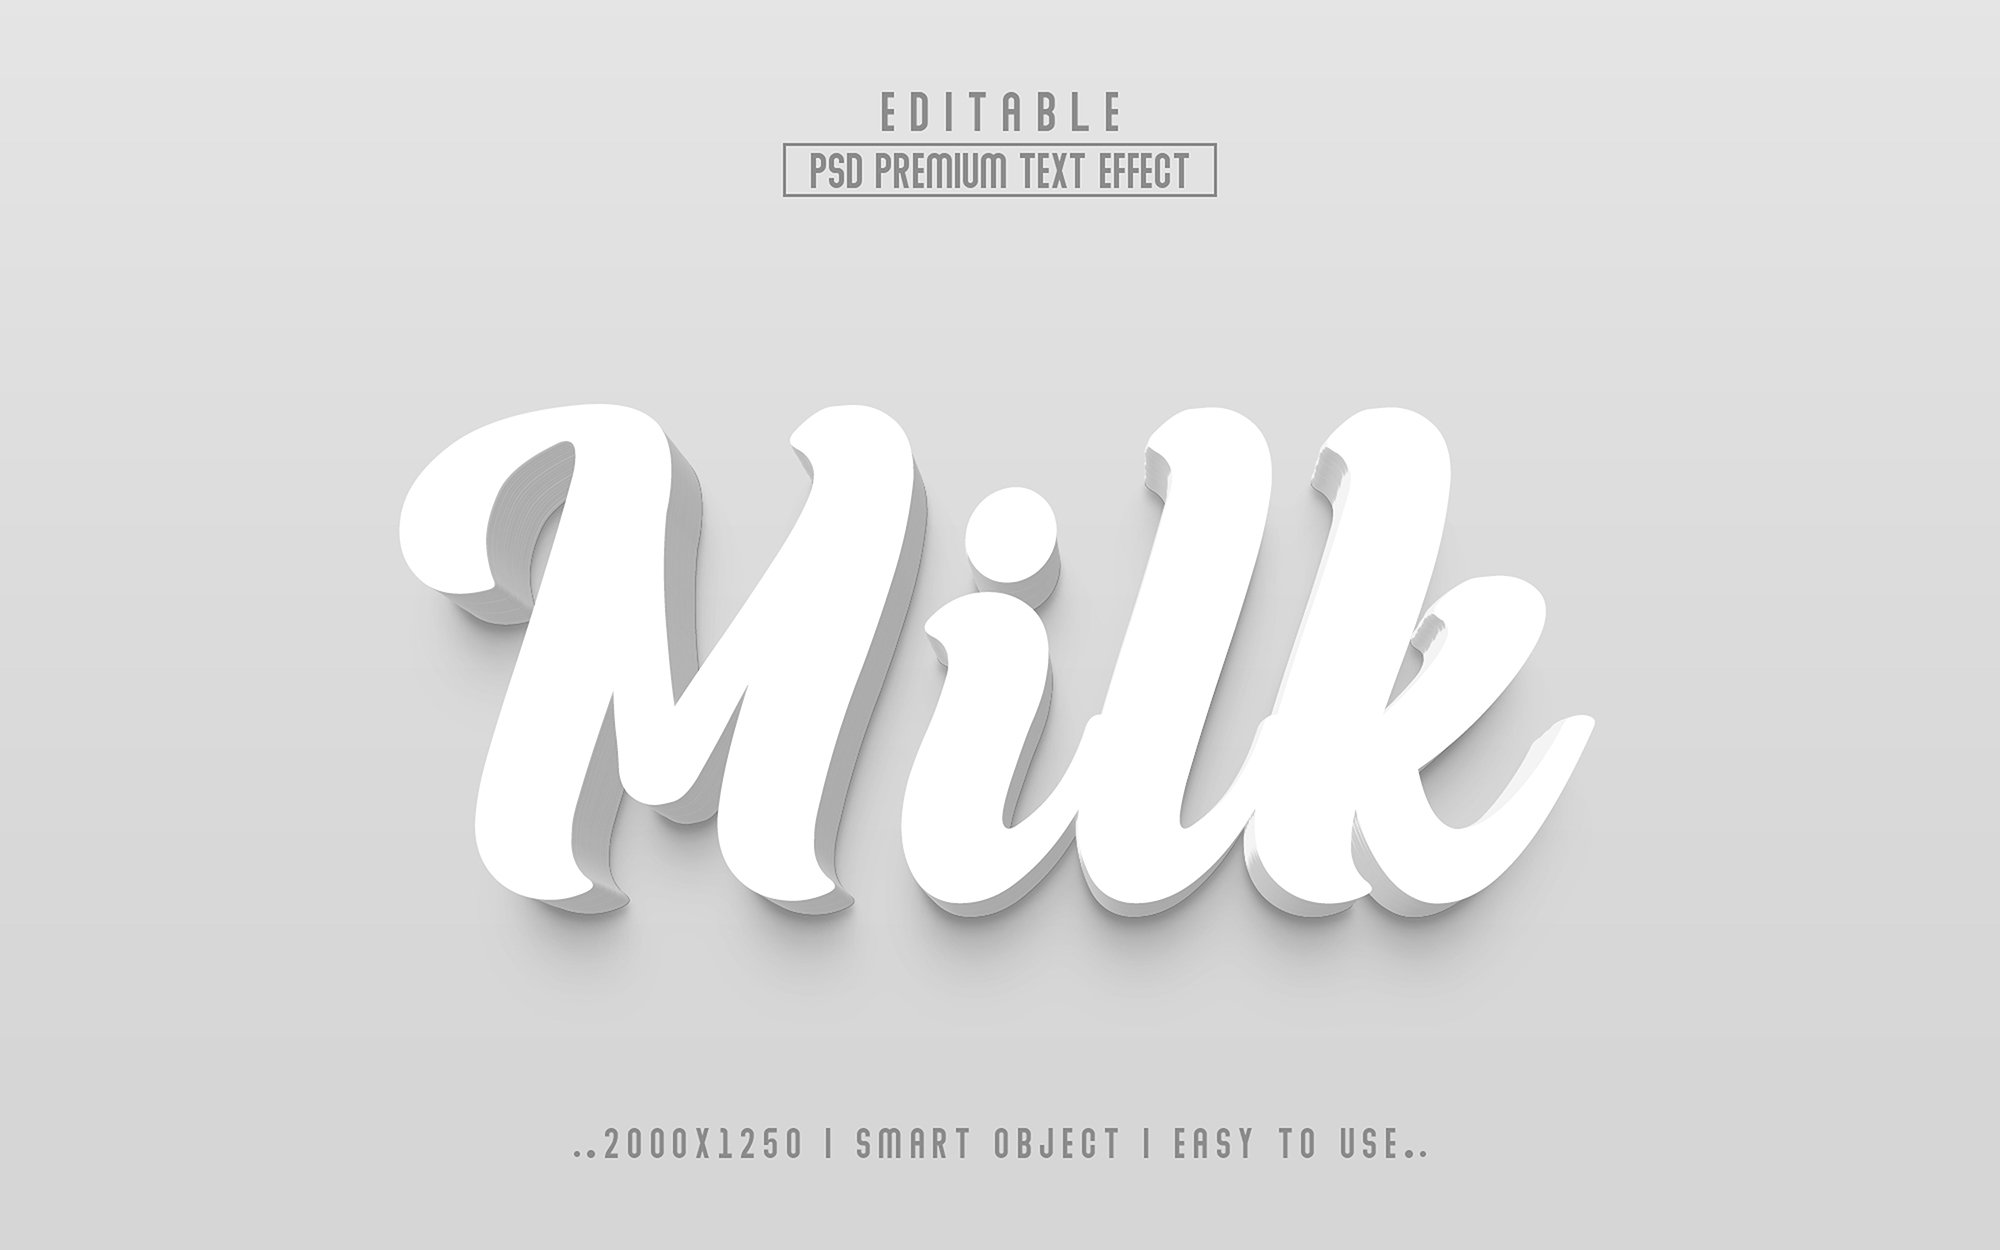 Milk 3D Editable psd Text Effectcover image.